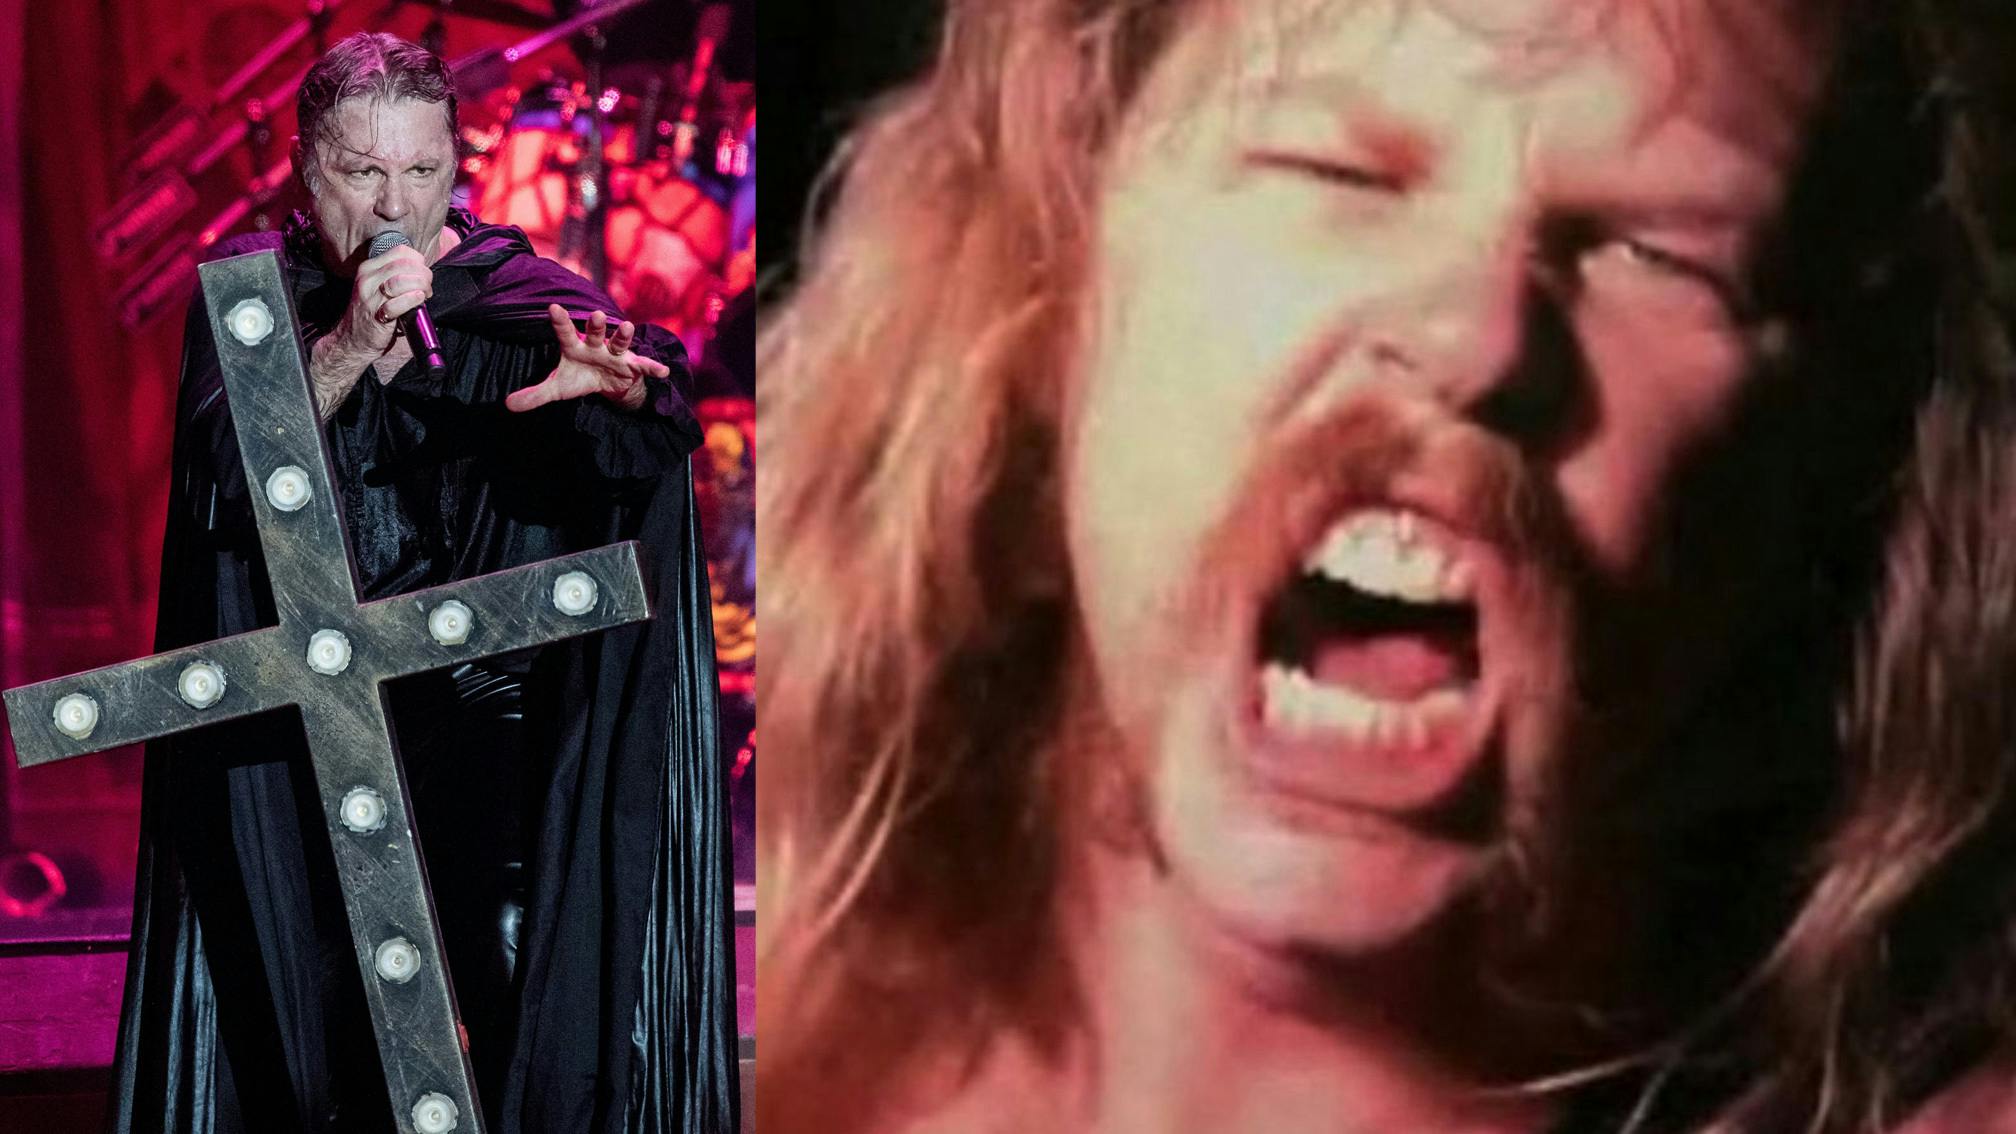 Listen To Metallica's Enter Sandman In The Style Of Iron Maiden